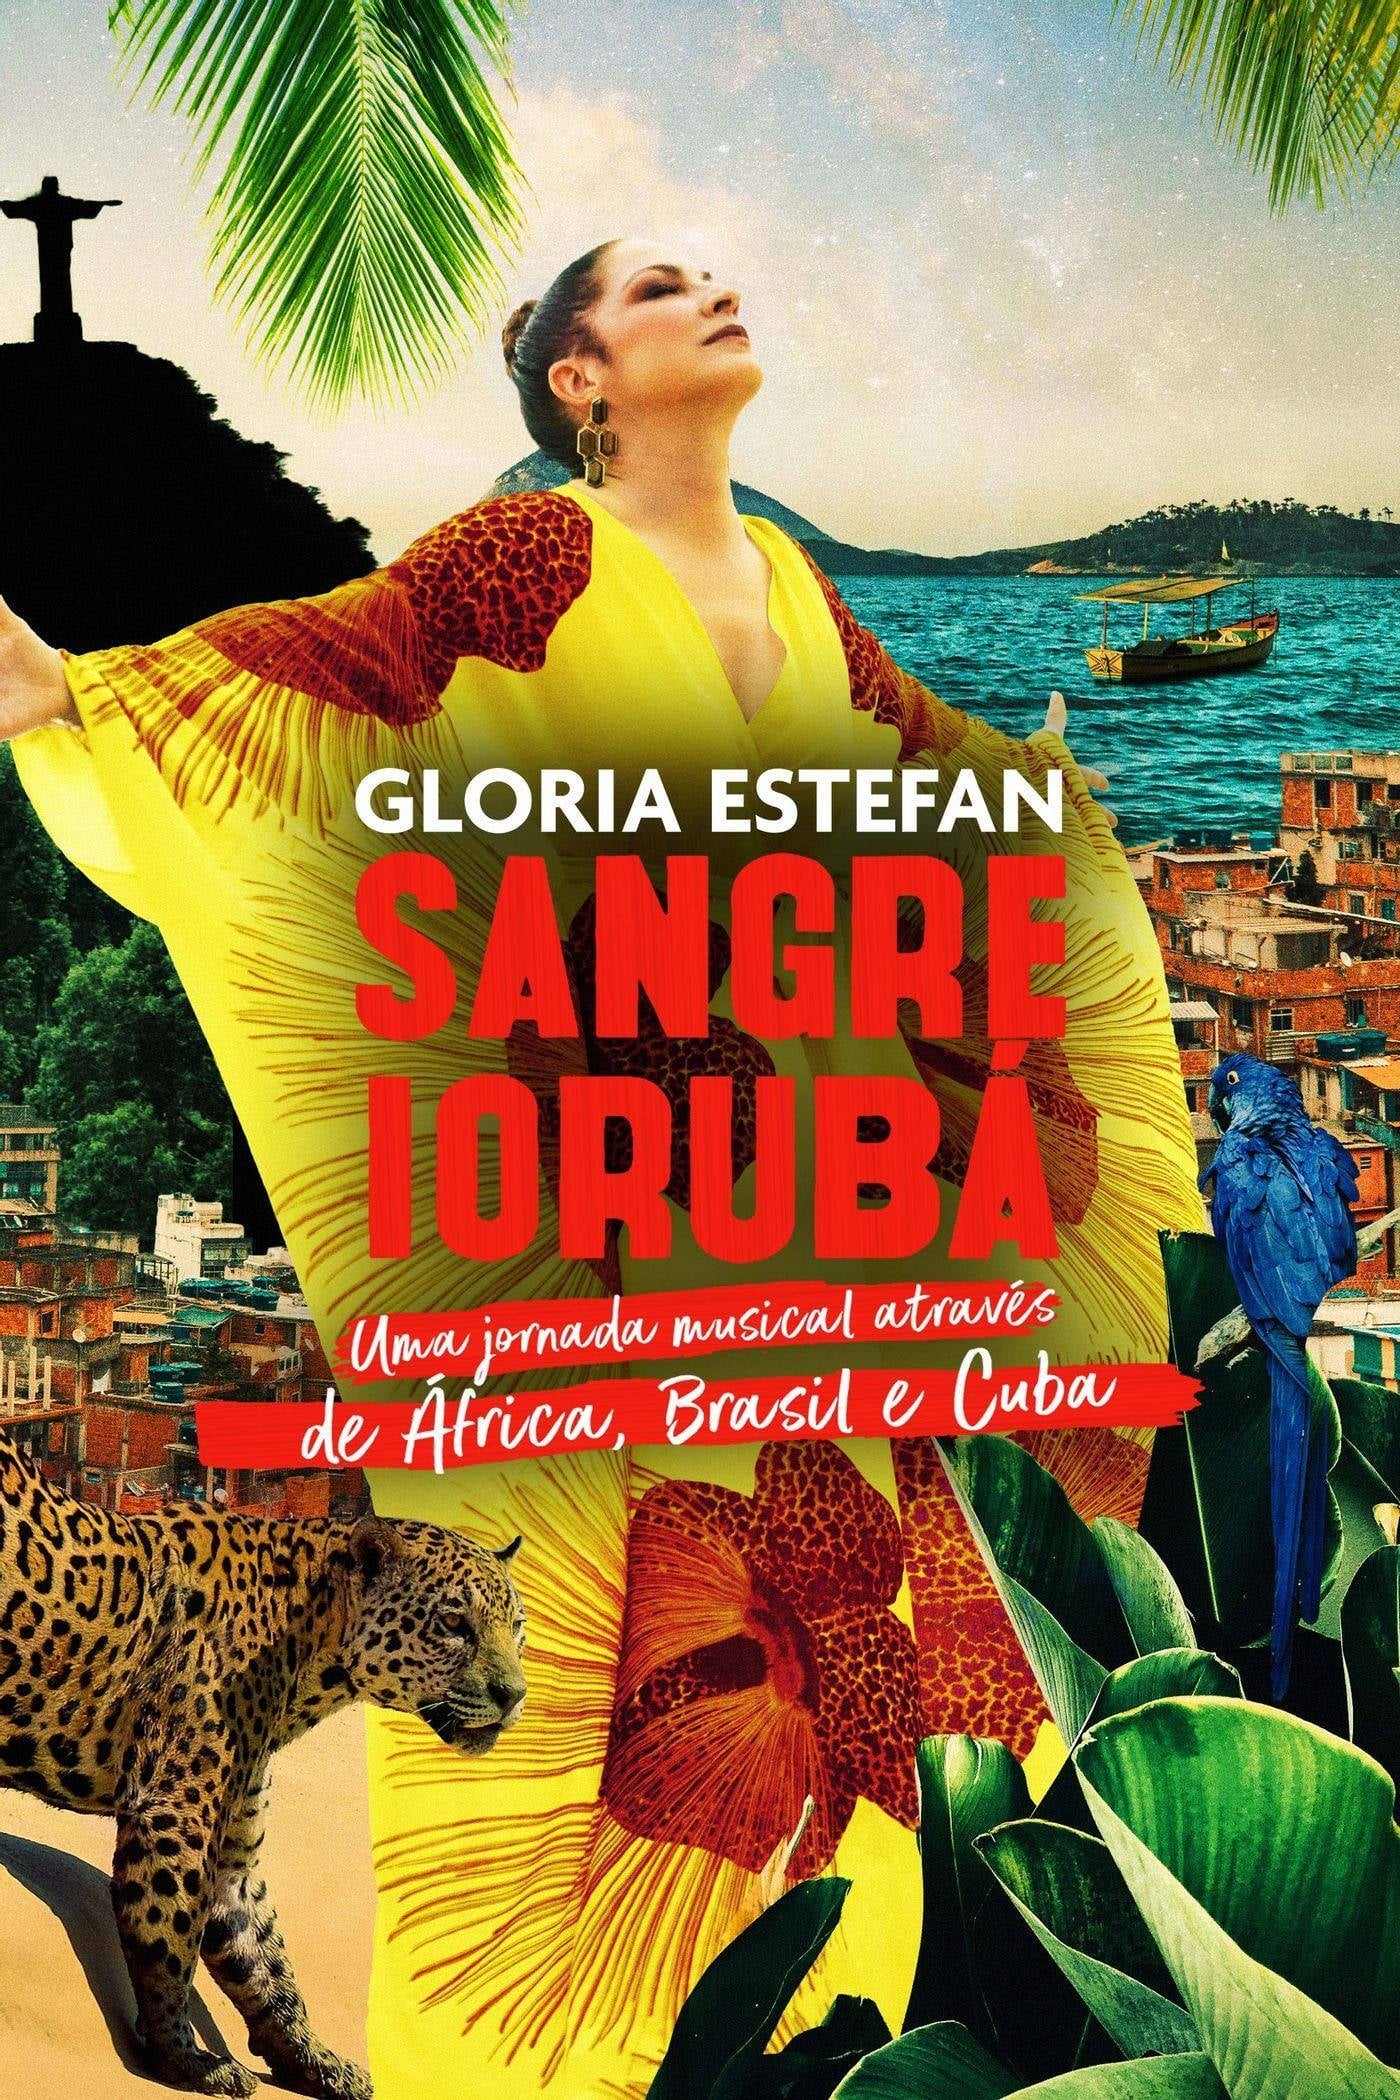 Movie poster for Gloria Estefan "Sangre Yoruba". Part of Sony Music's Premium Content Division.